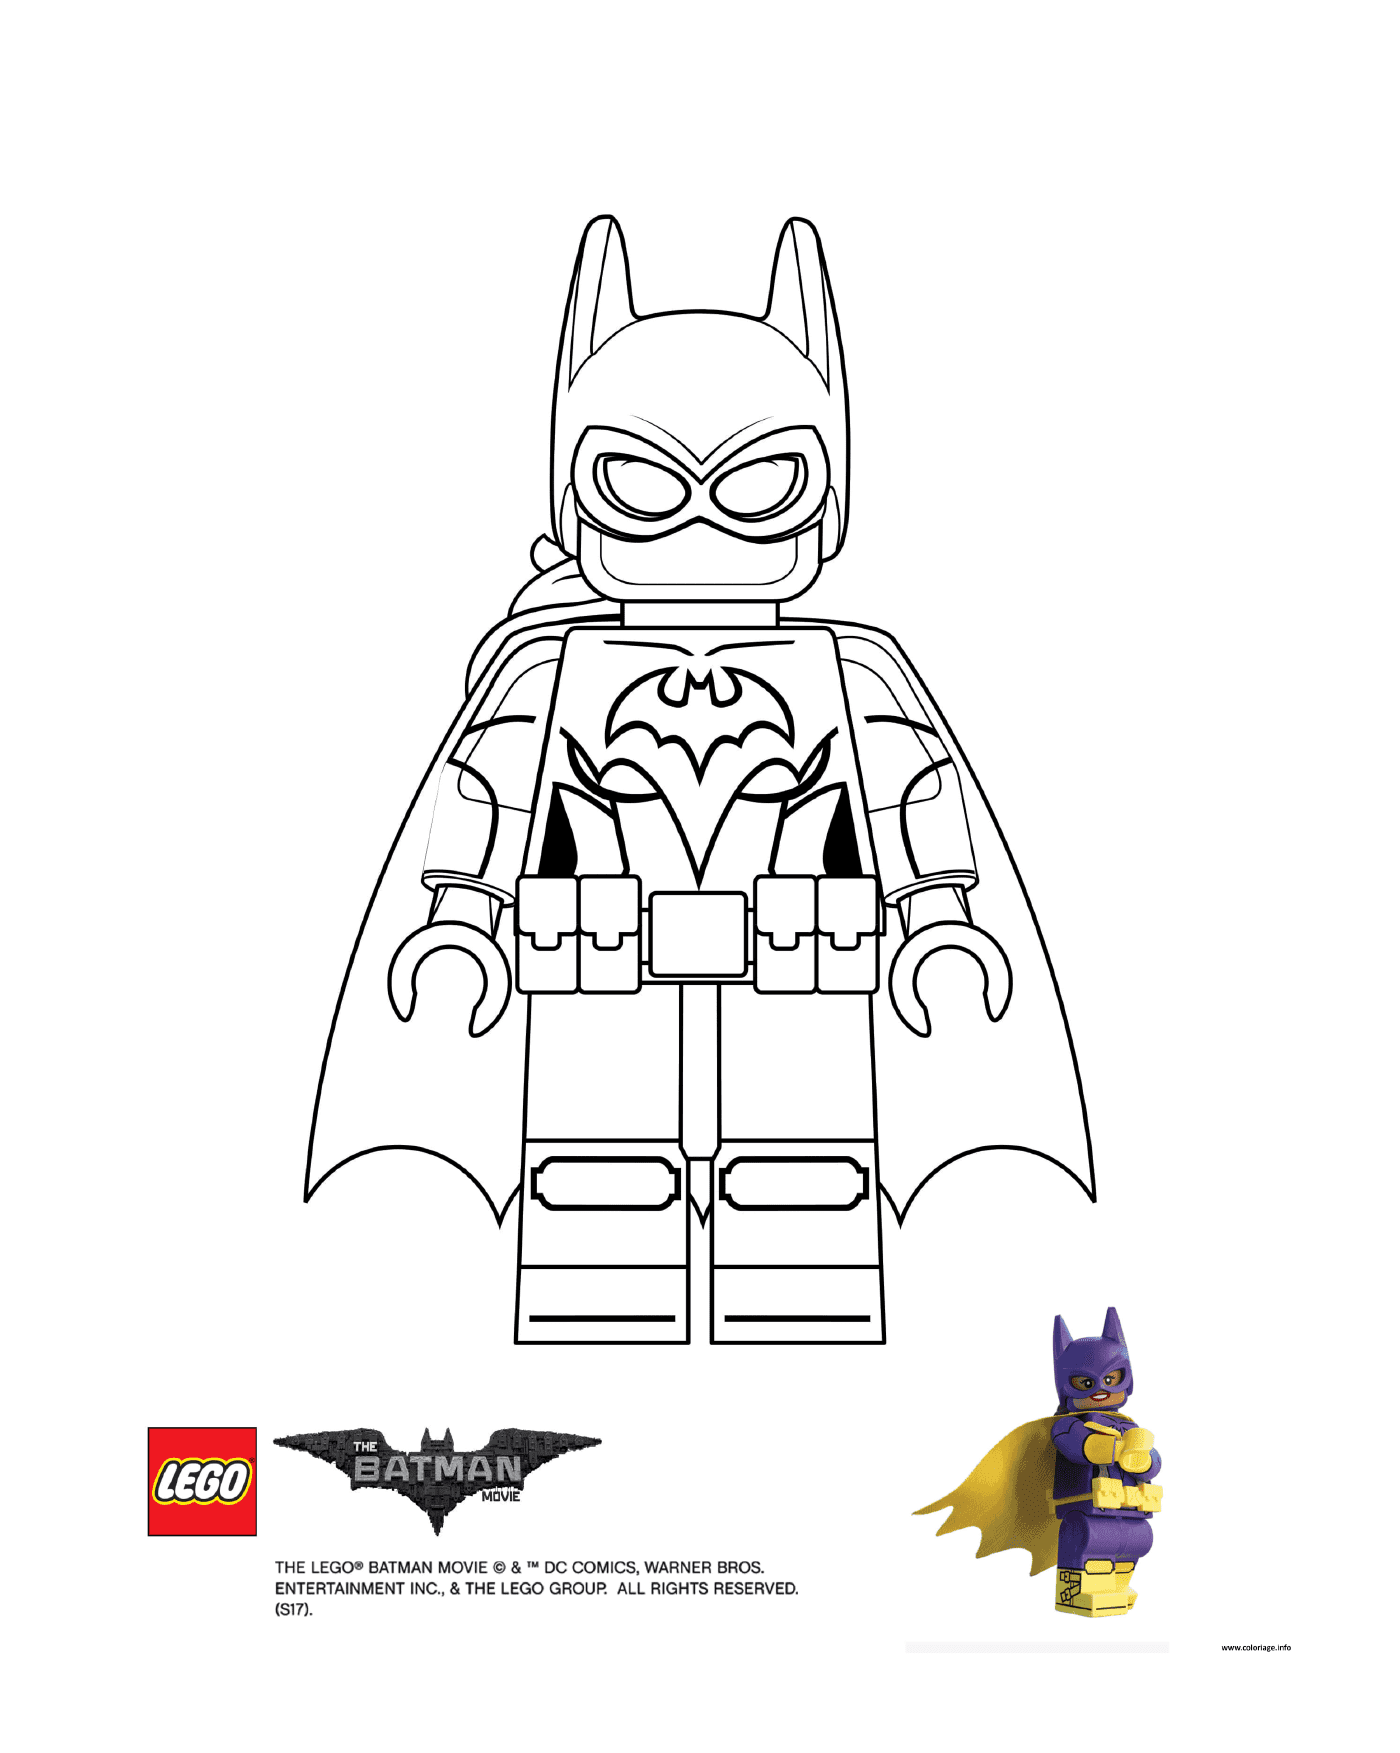   Batgirl dans le film Lego Batman 